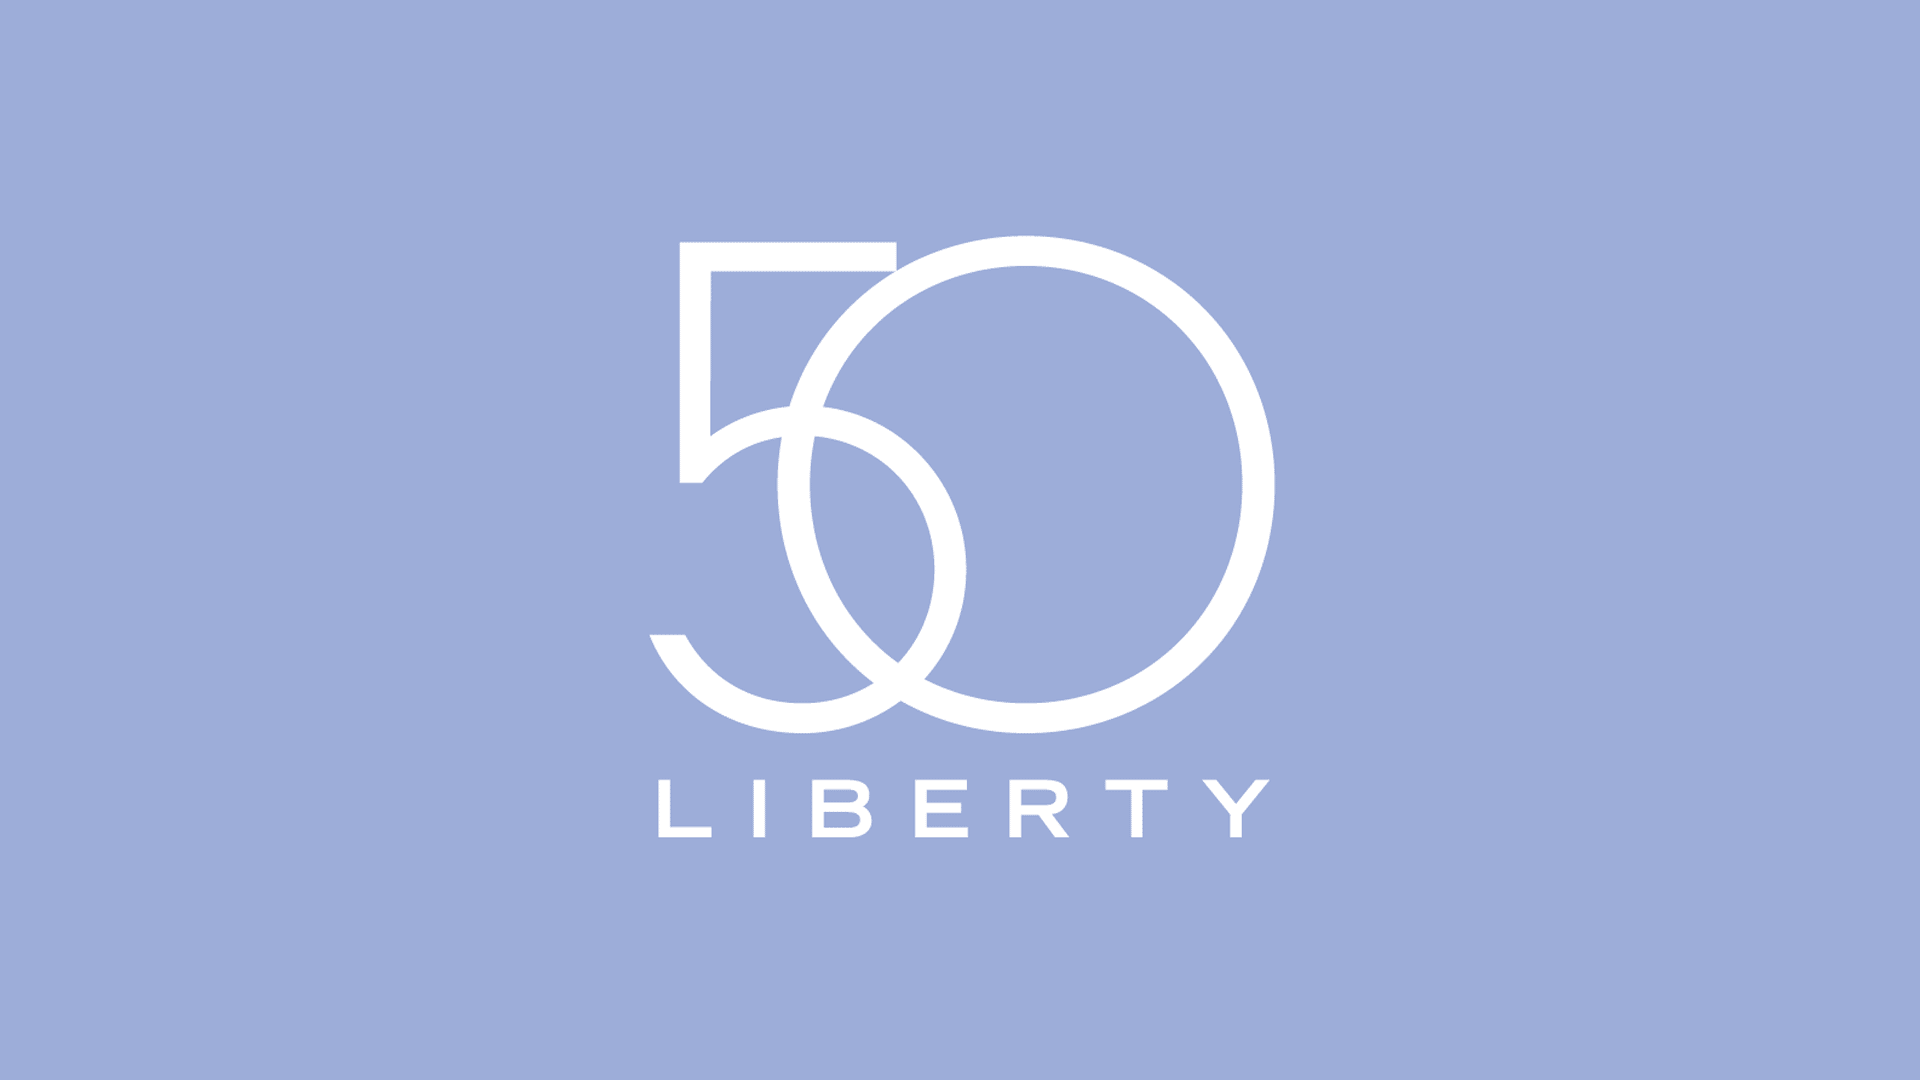 50 Liberty logo on light blue background